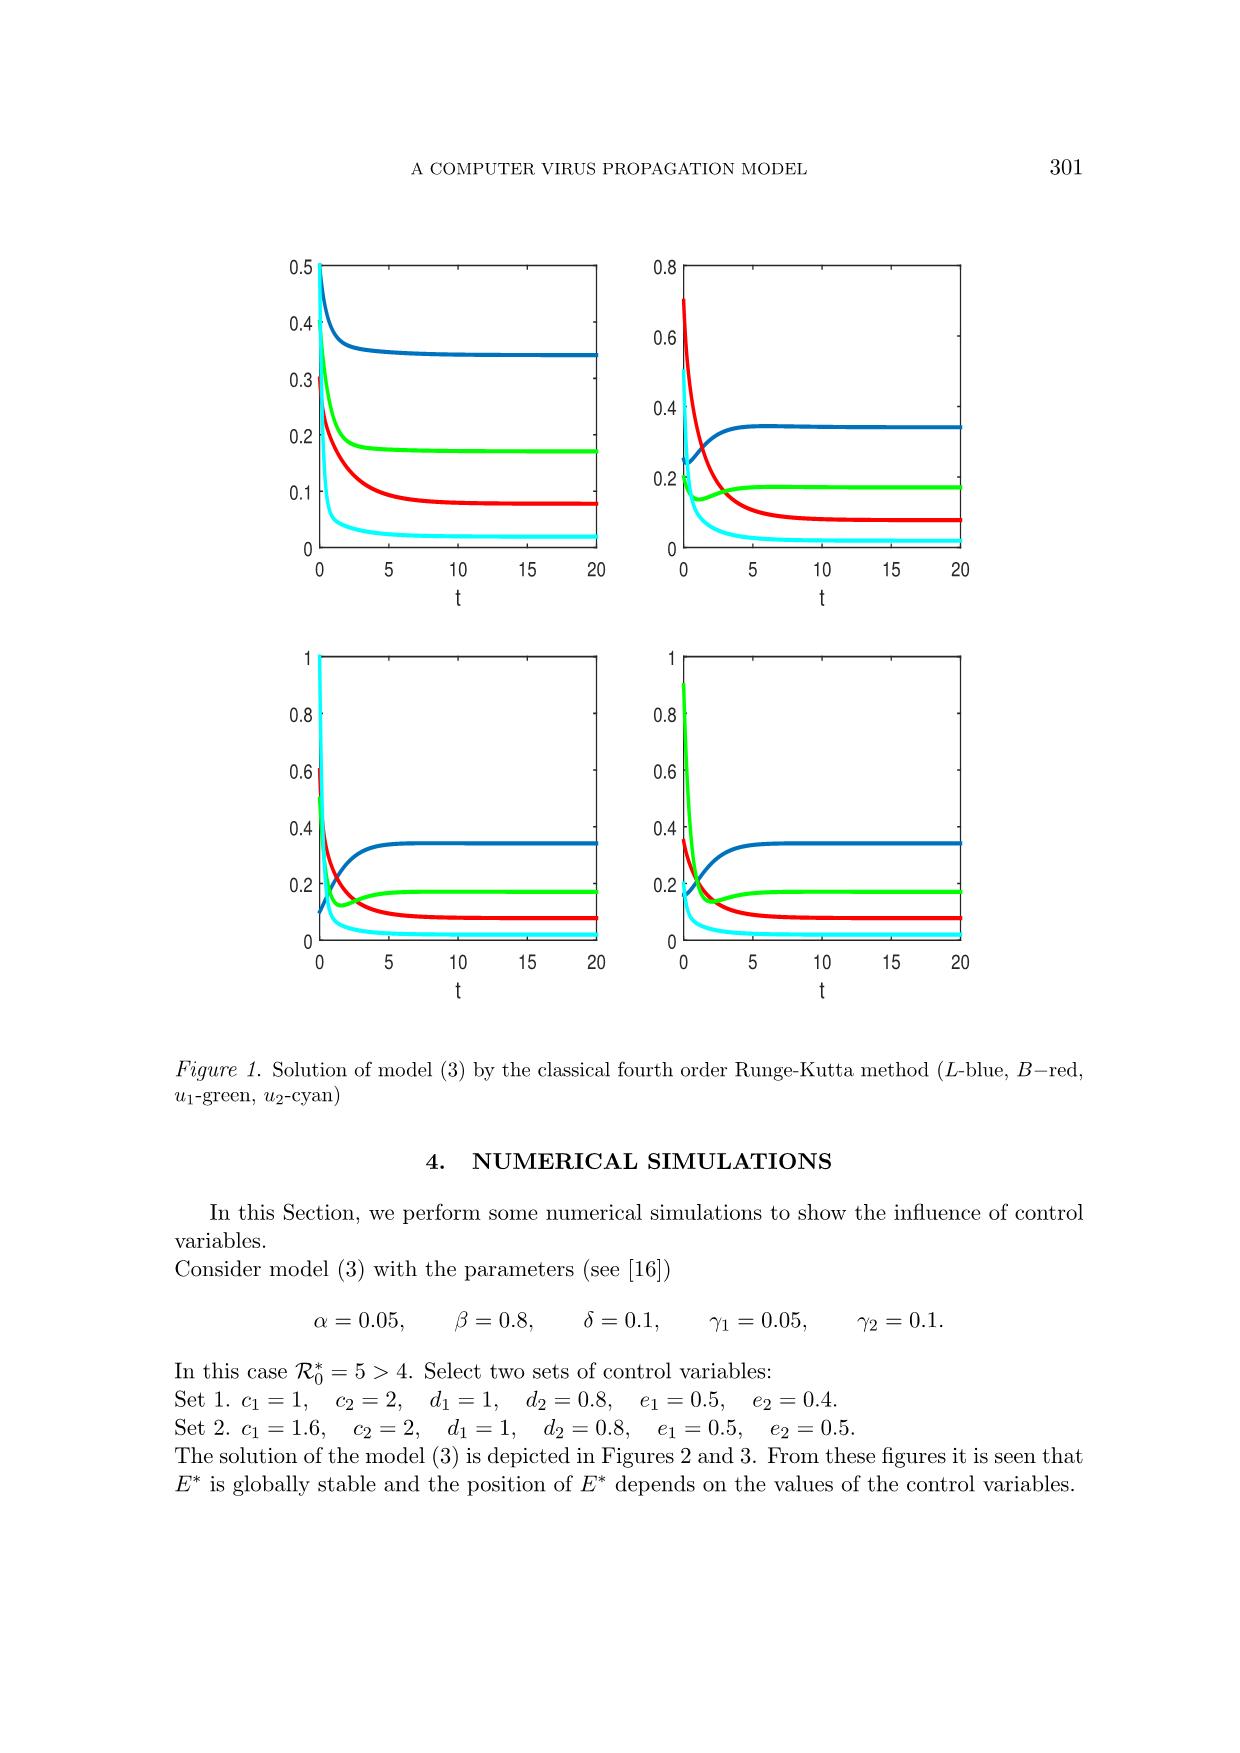 Global dynamics of a computer virus propagation model with feedback controls trang 7